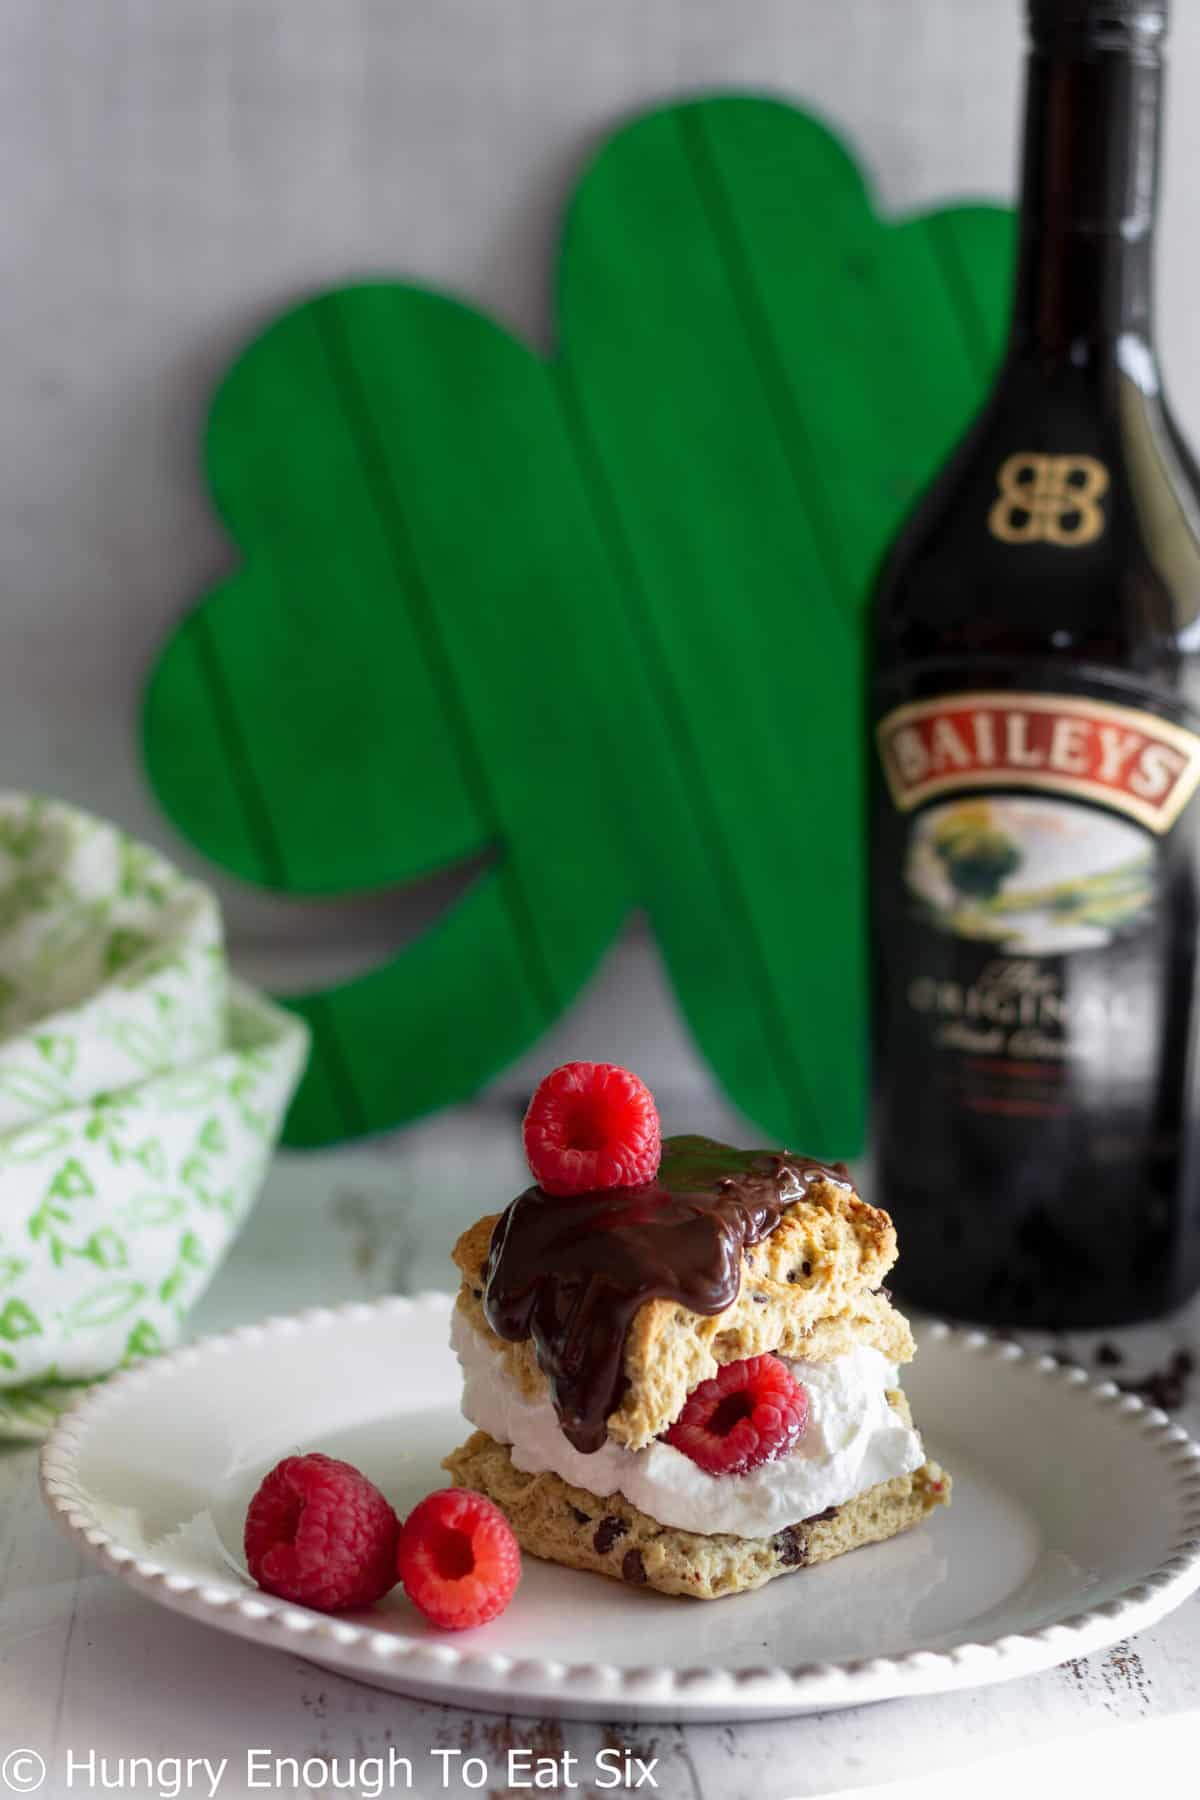 Baileys Irish cream with scone dessert.